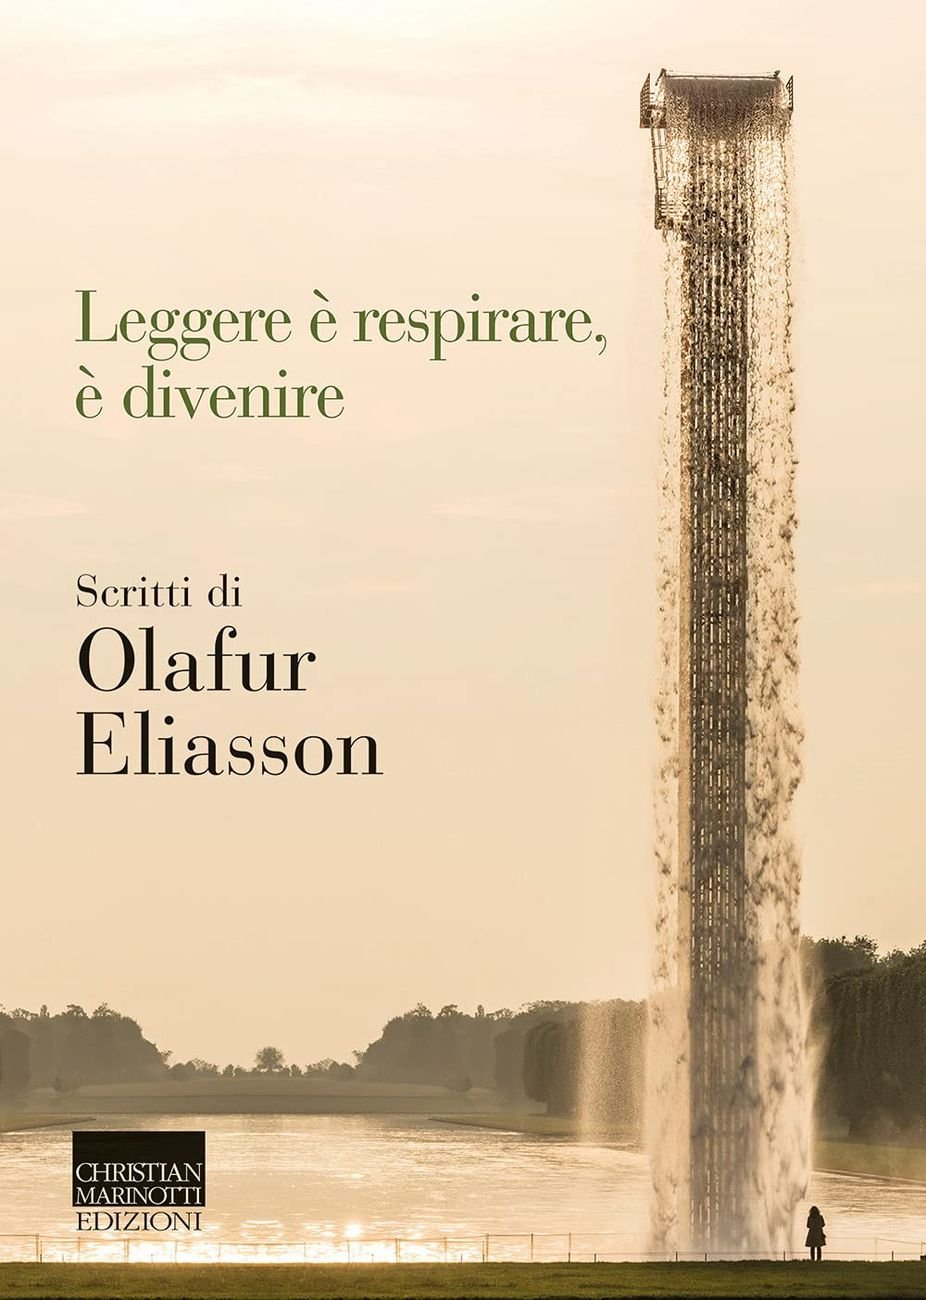 Olafur Eliasson – Leggere è respirare, è divenire (Christian Marinotti, Milano 2021)